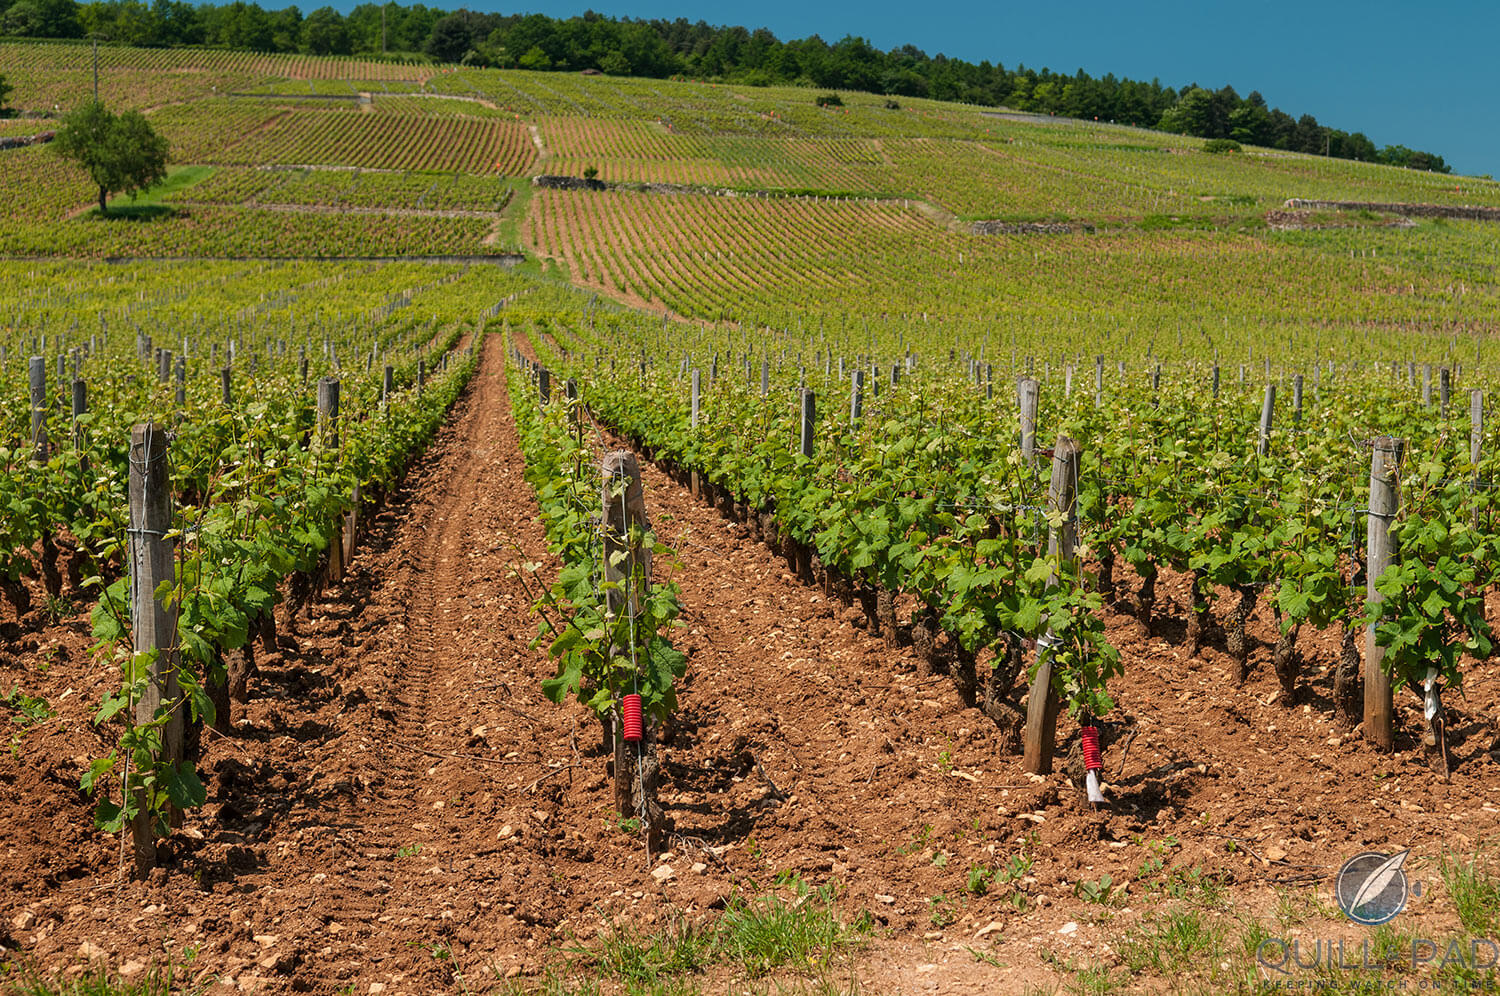 Vineyards of the Domaine de la Romanée-Conti in Burgundy